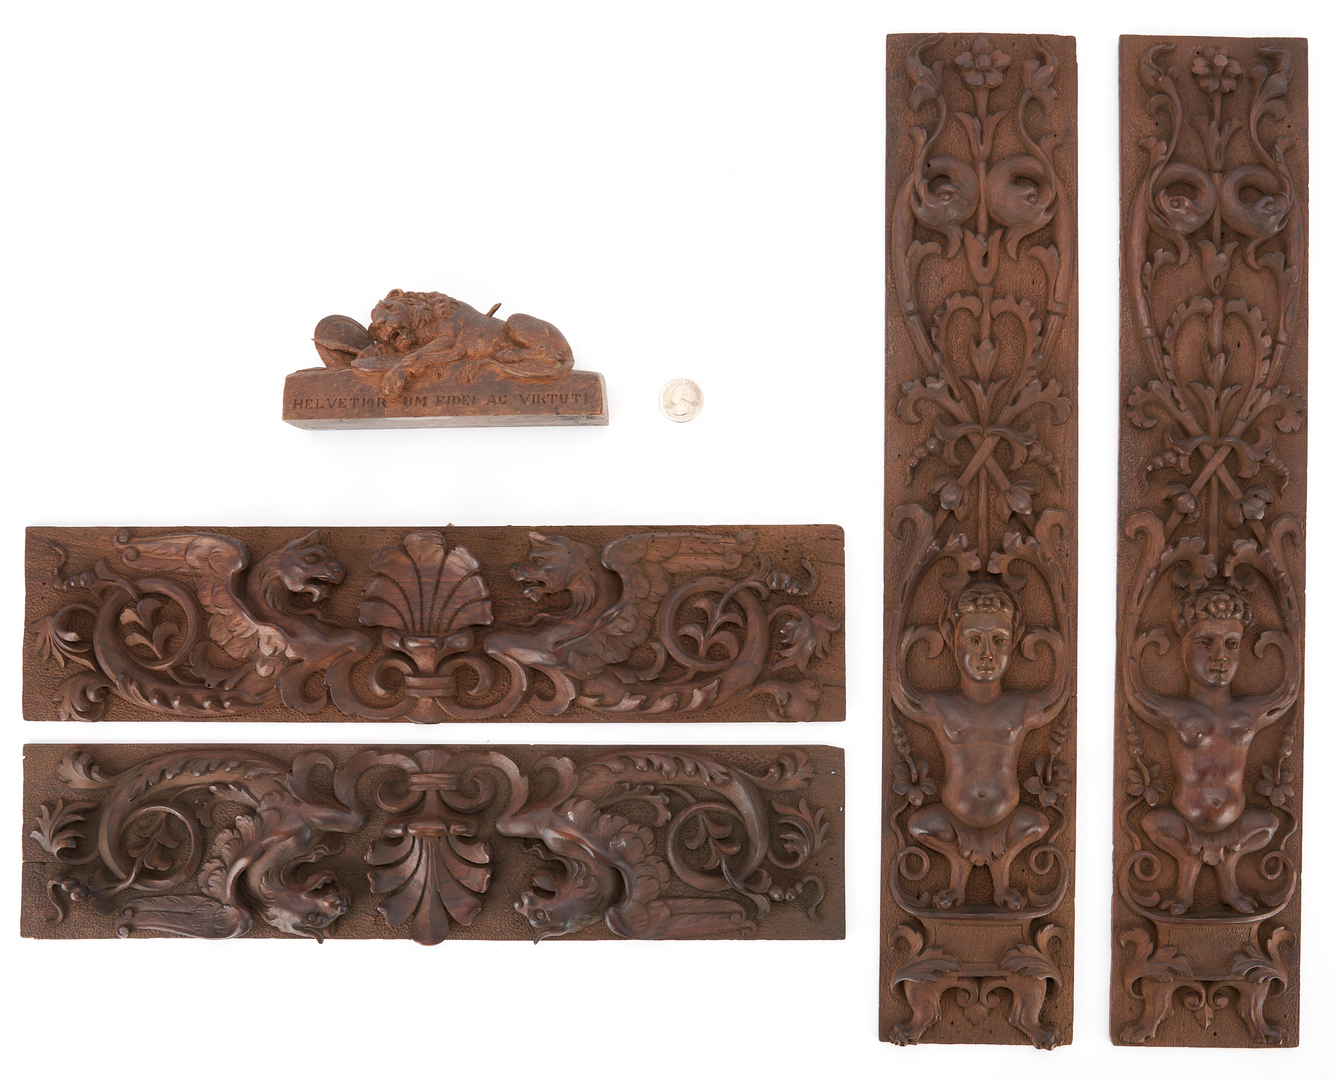 Lot 173: 12 Decorative Accessory Items, incl. Italian Baroque Style Panels